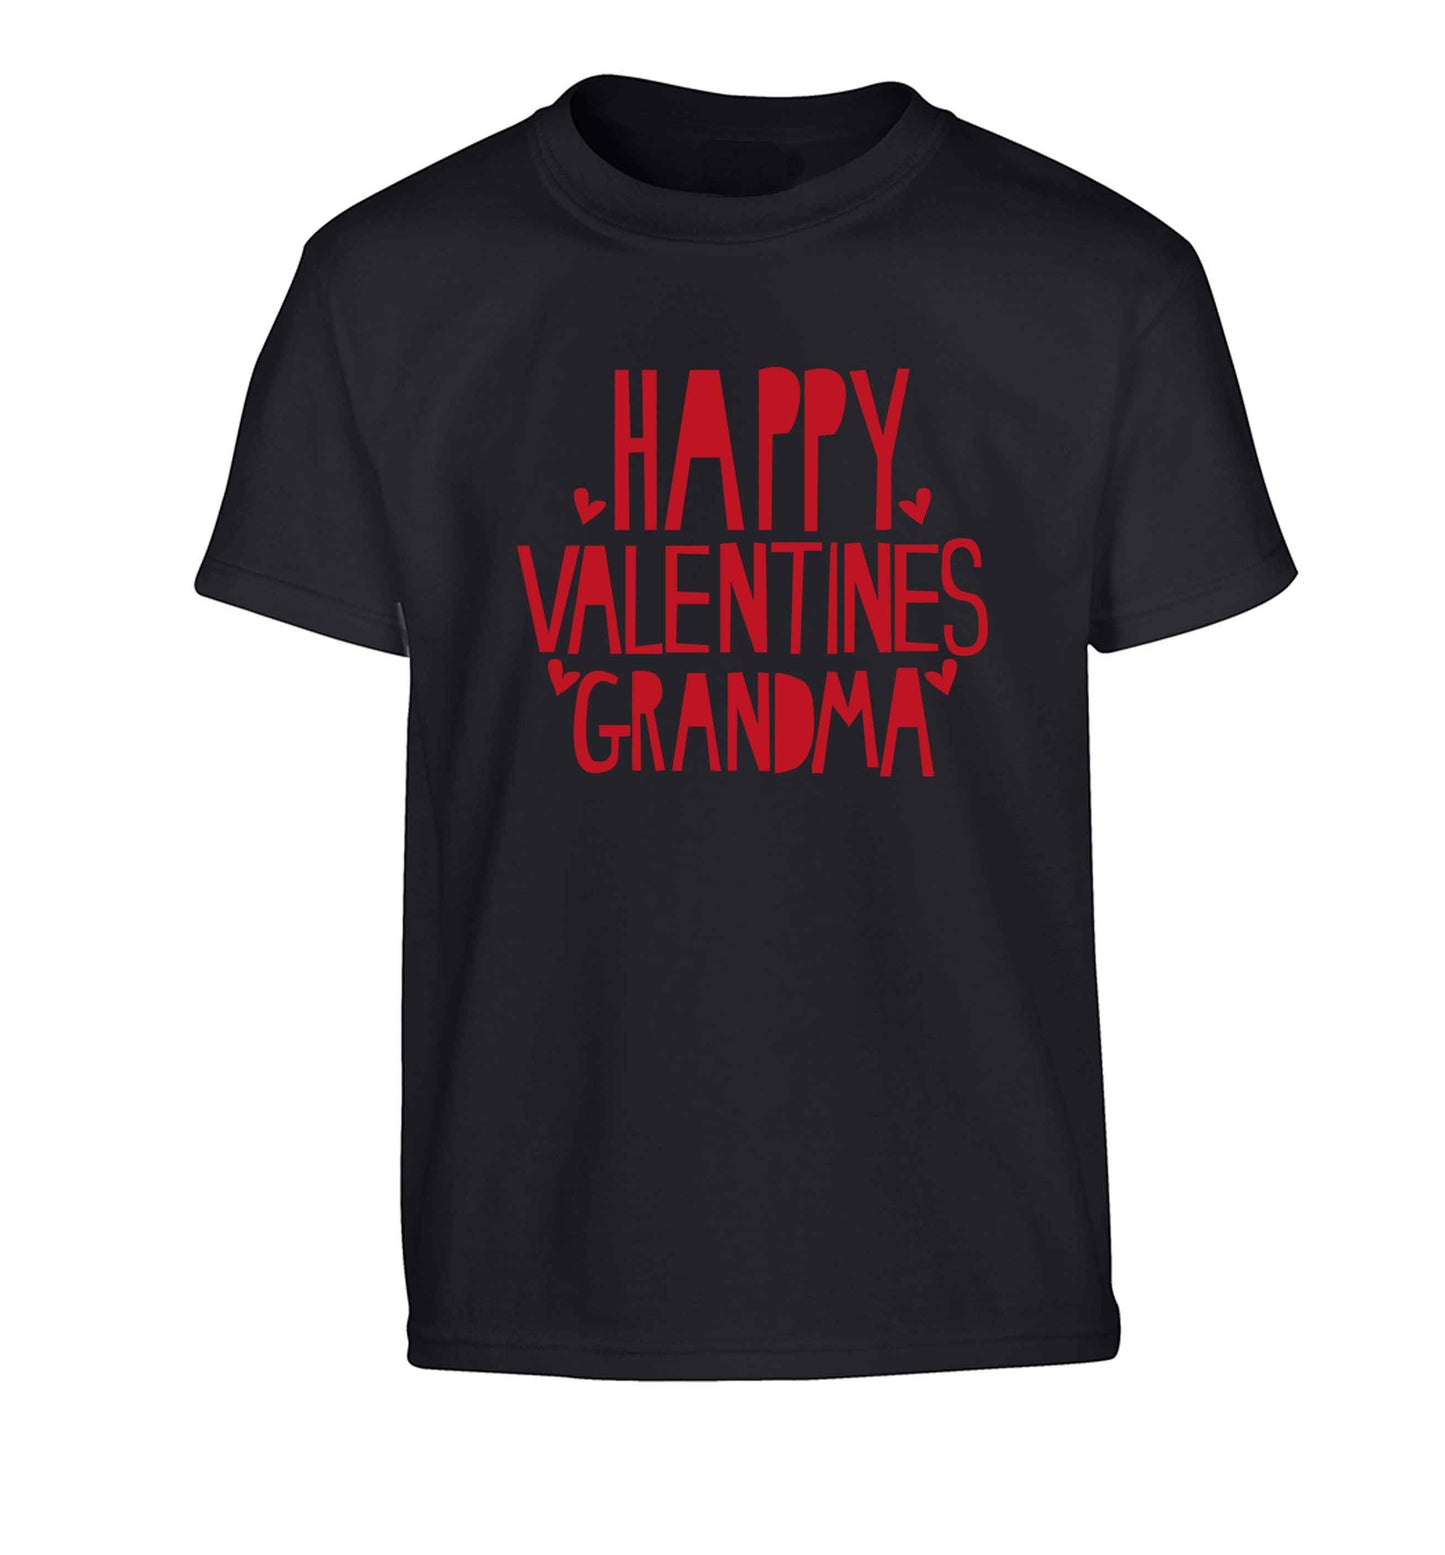 Happy valentines grandma Children's black Tshirt 12-13 Years